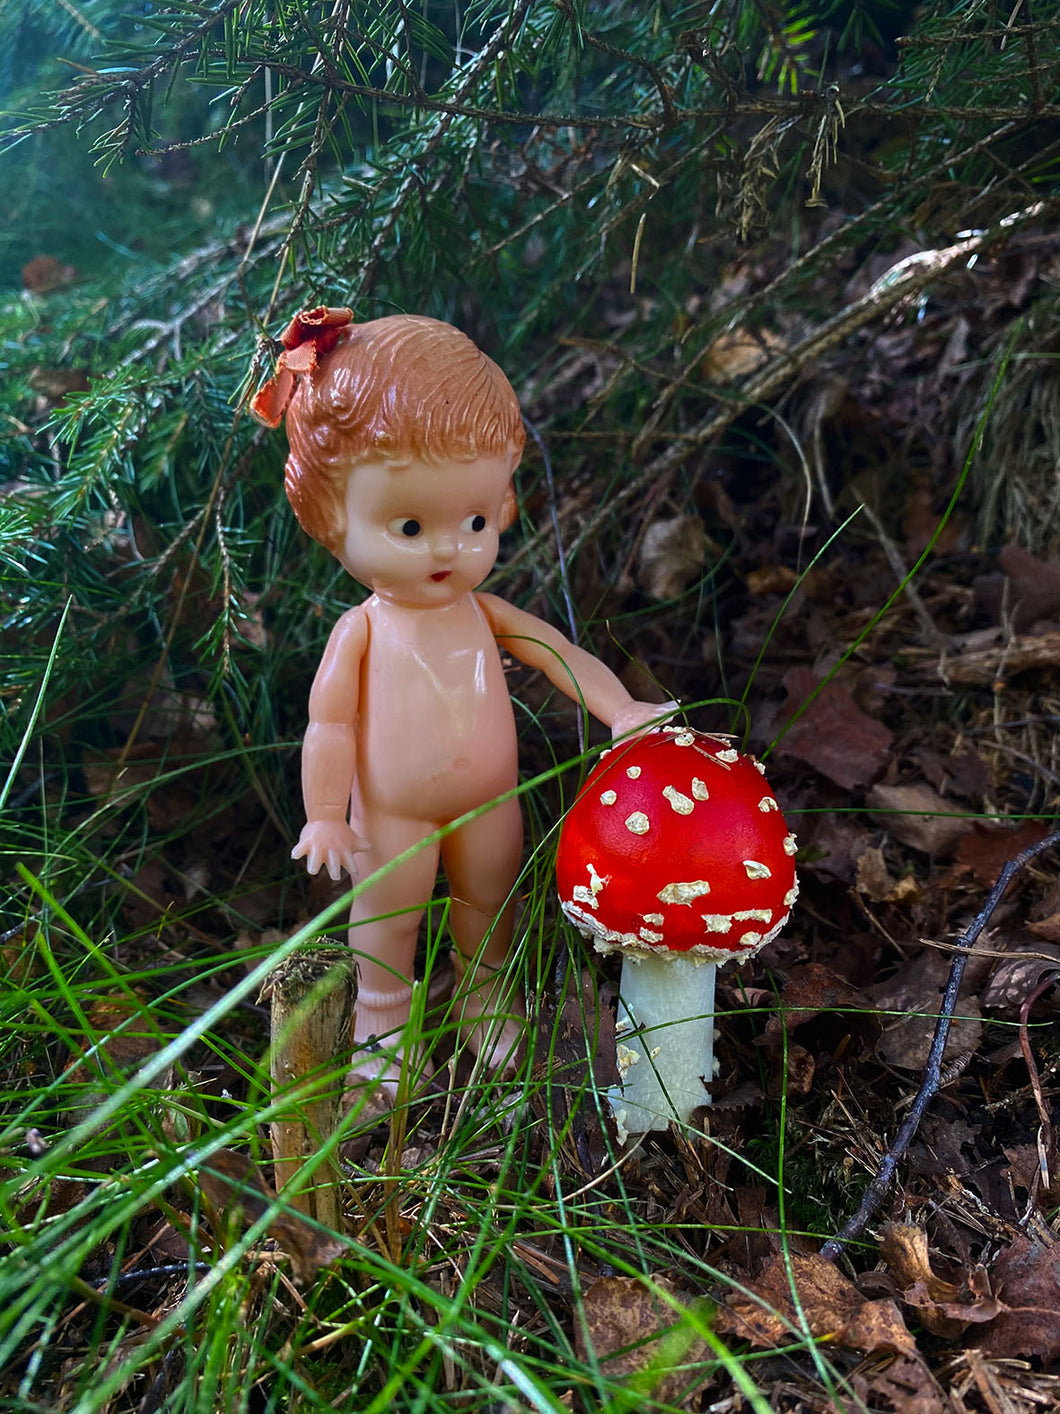 Lilly and mushroom